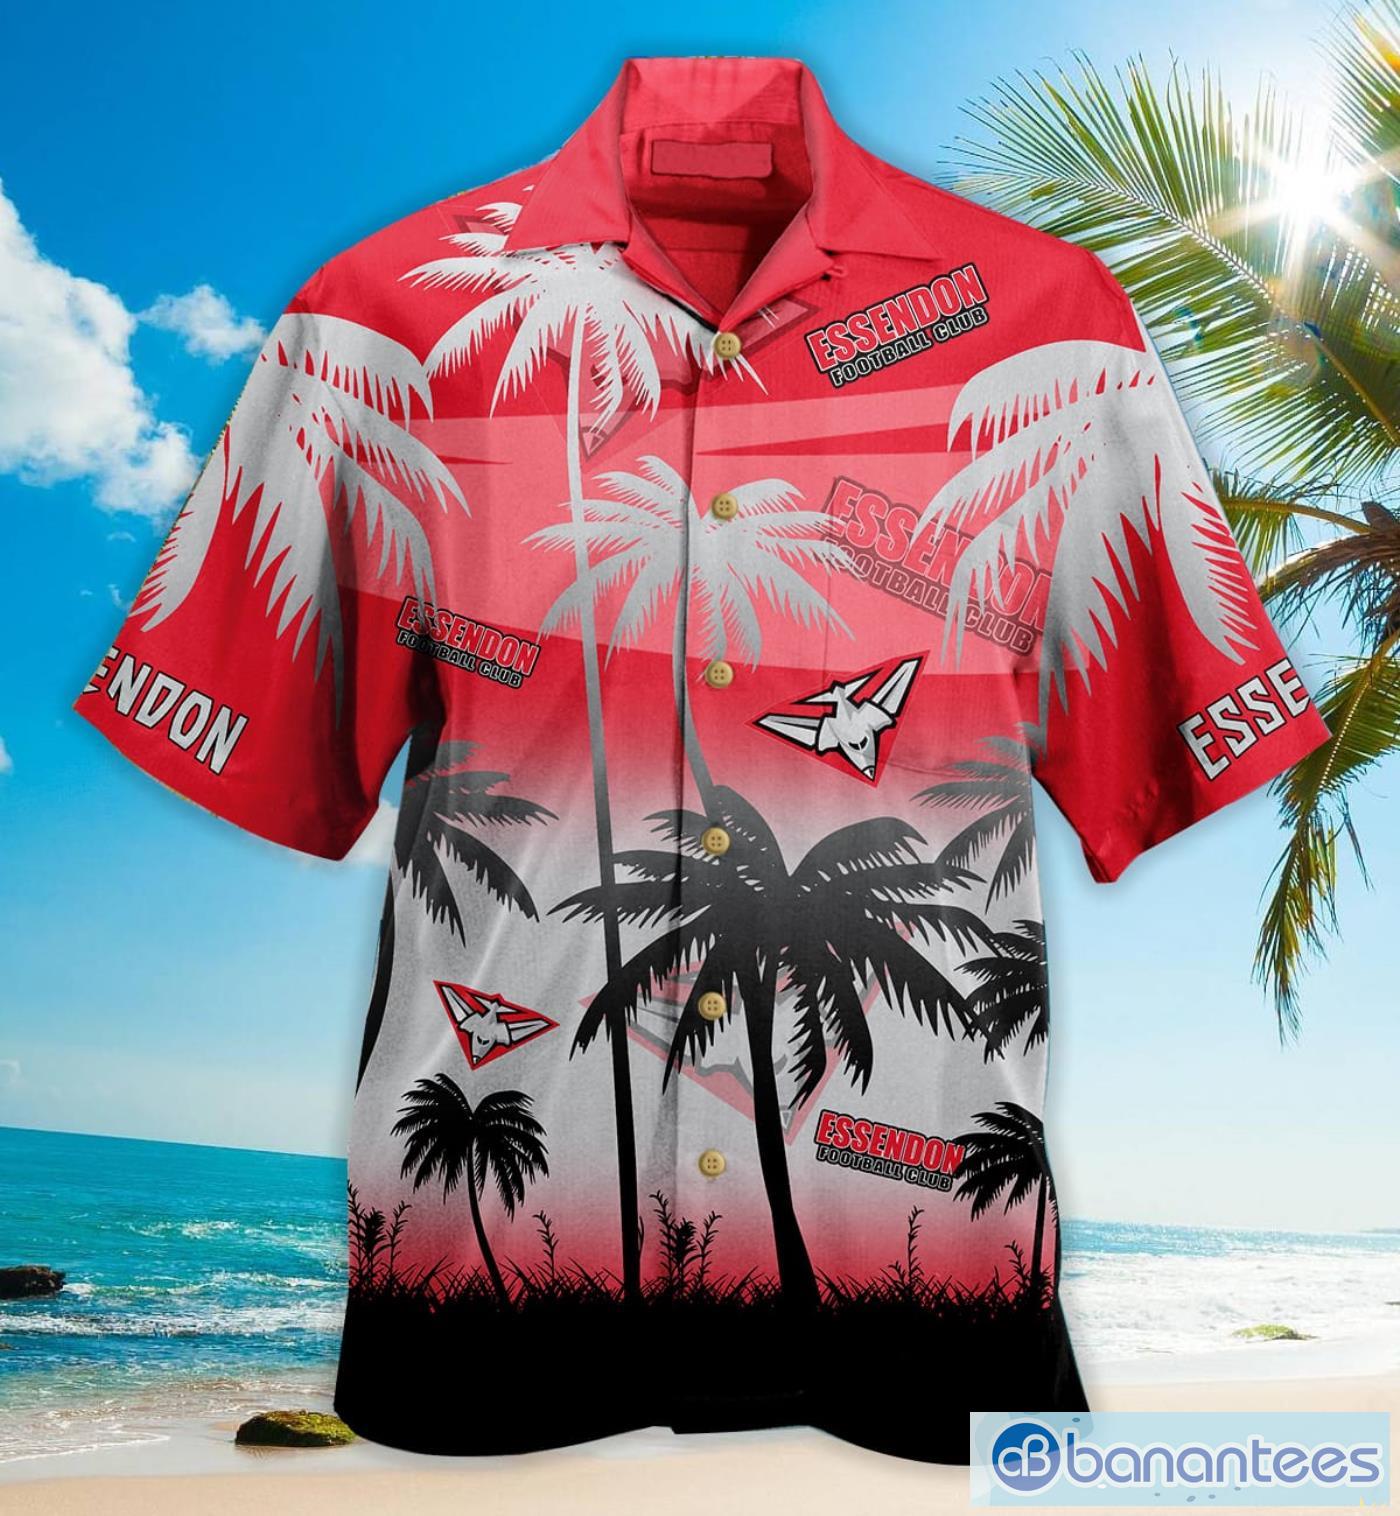 Essendon Football Club Hawaiian Shirt For Fans Product Photo 1